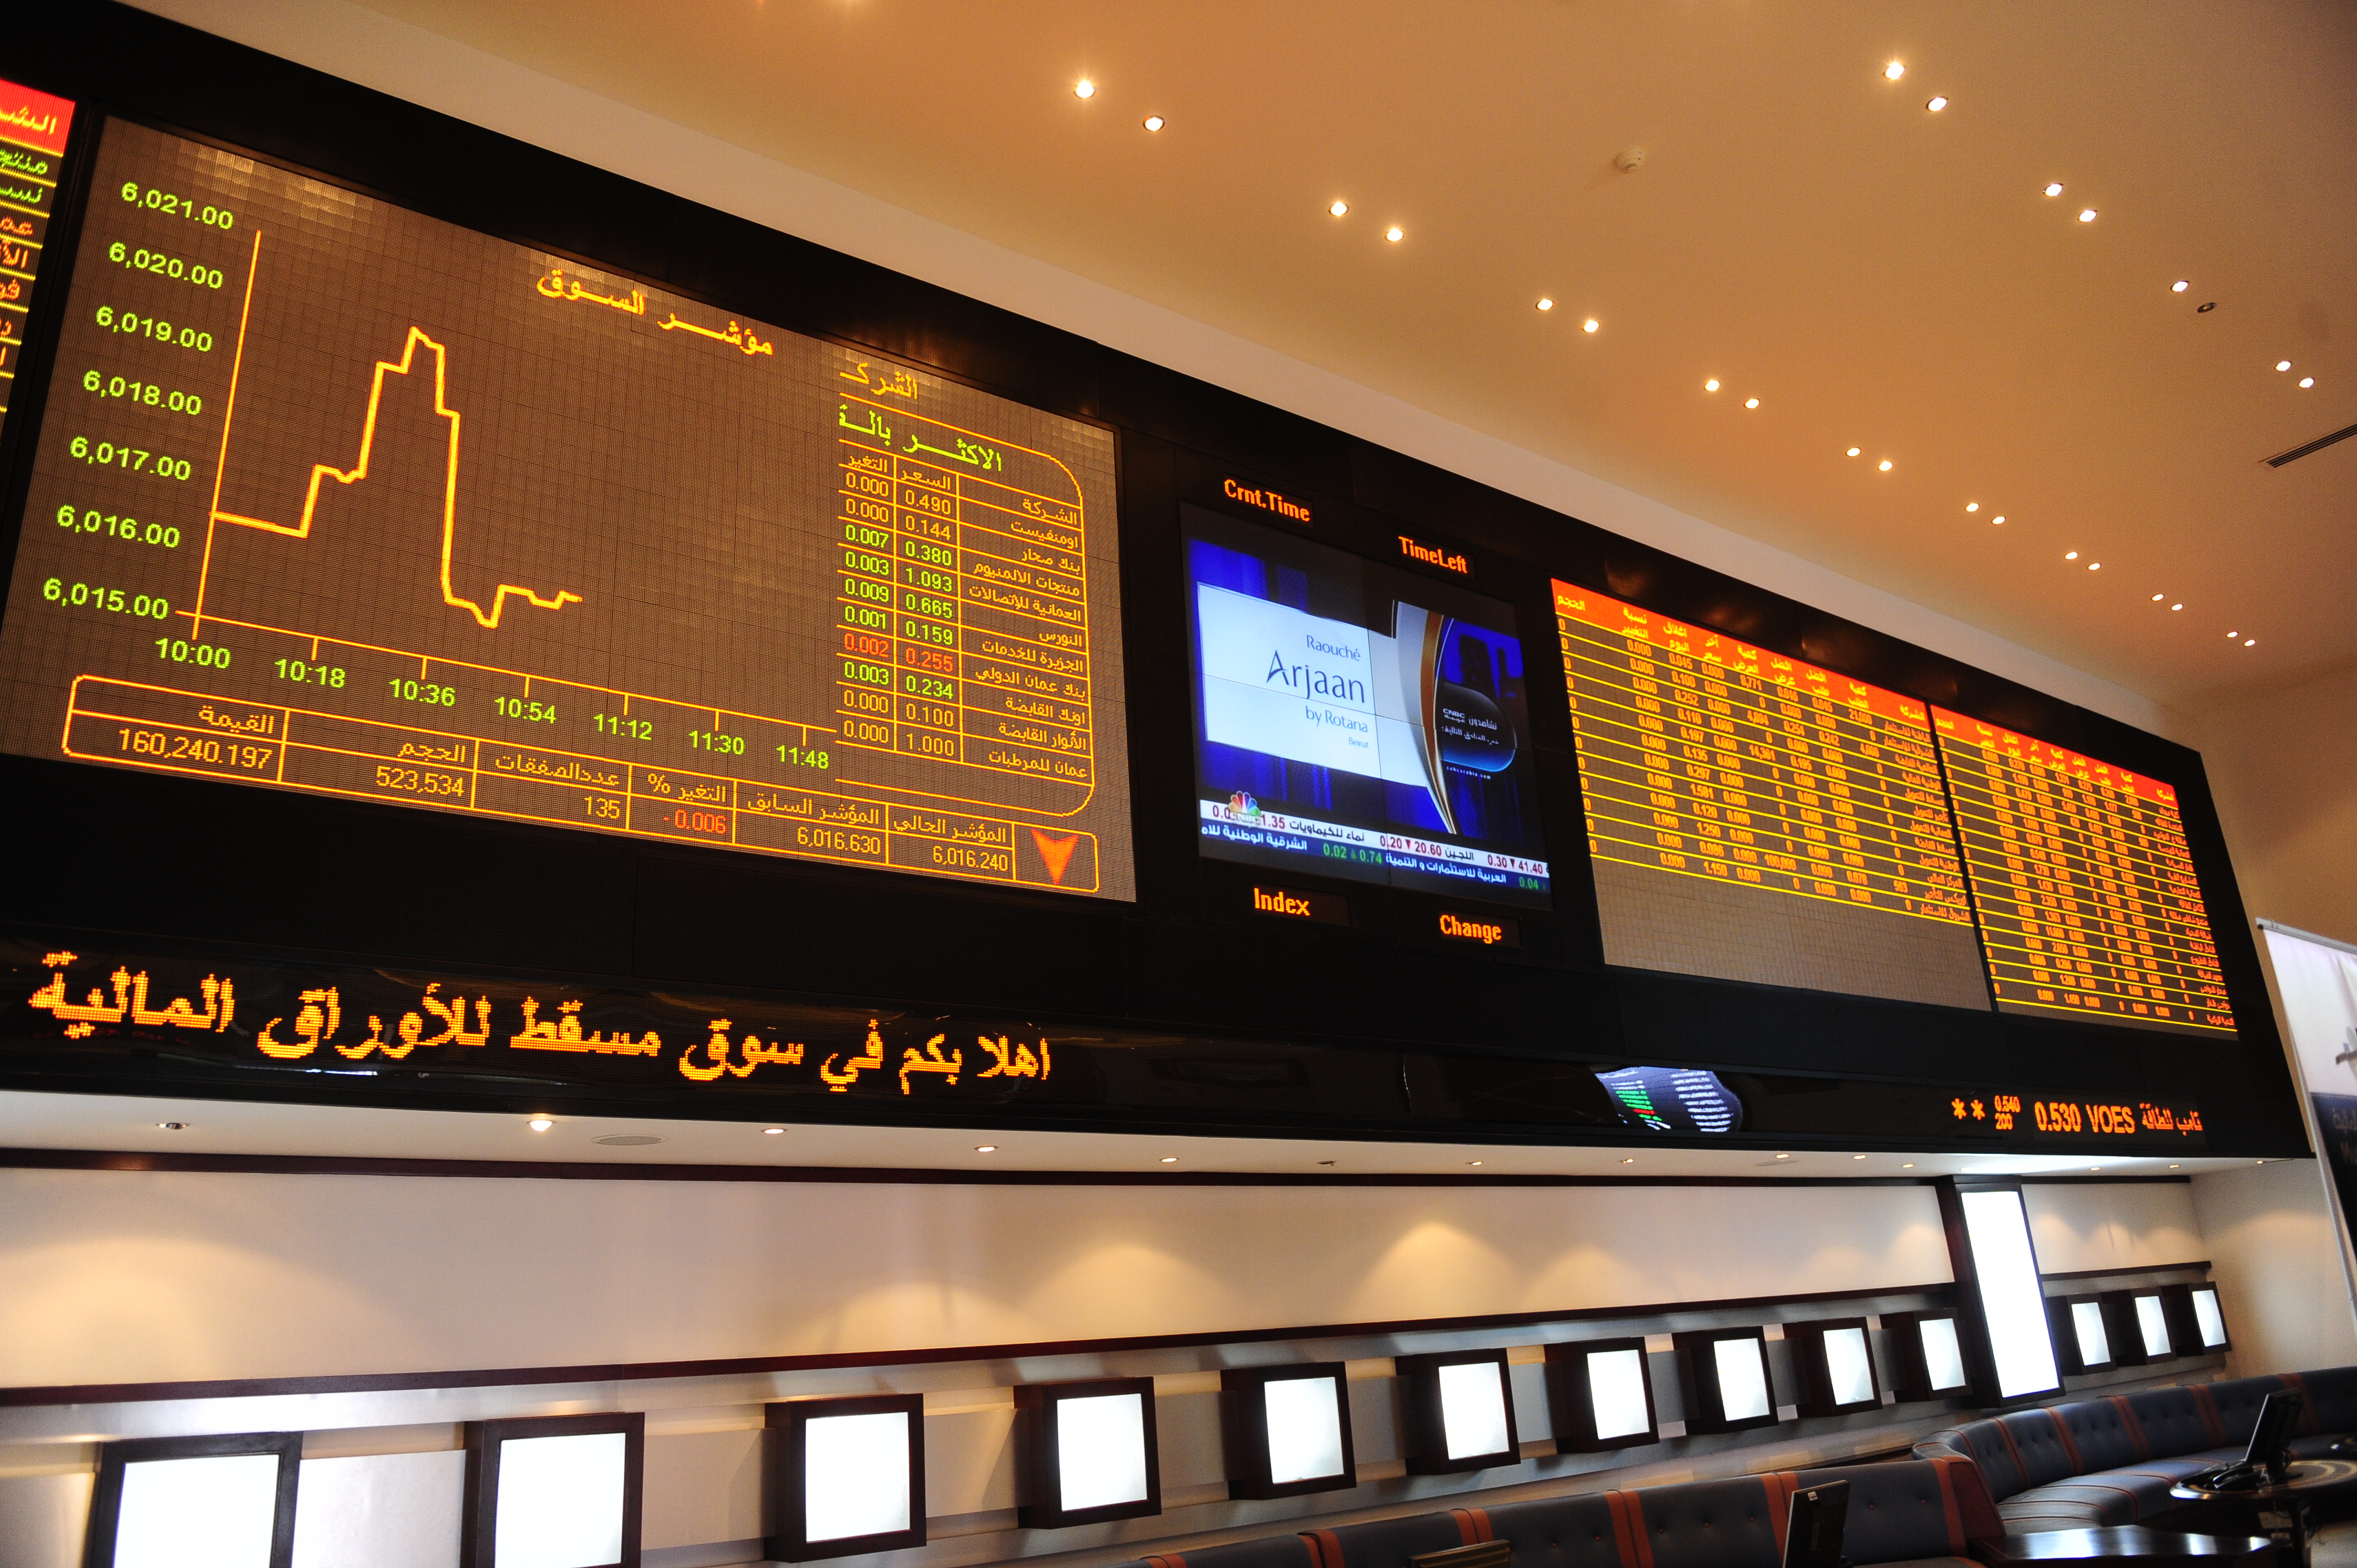 Muscat bourse dips below 5,000-mark